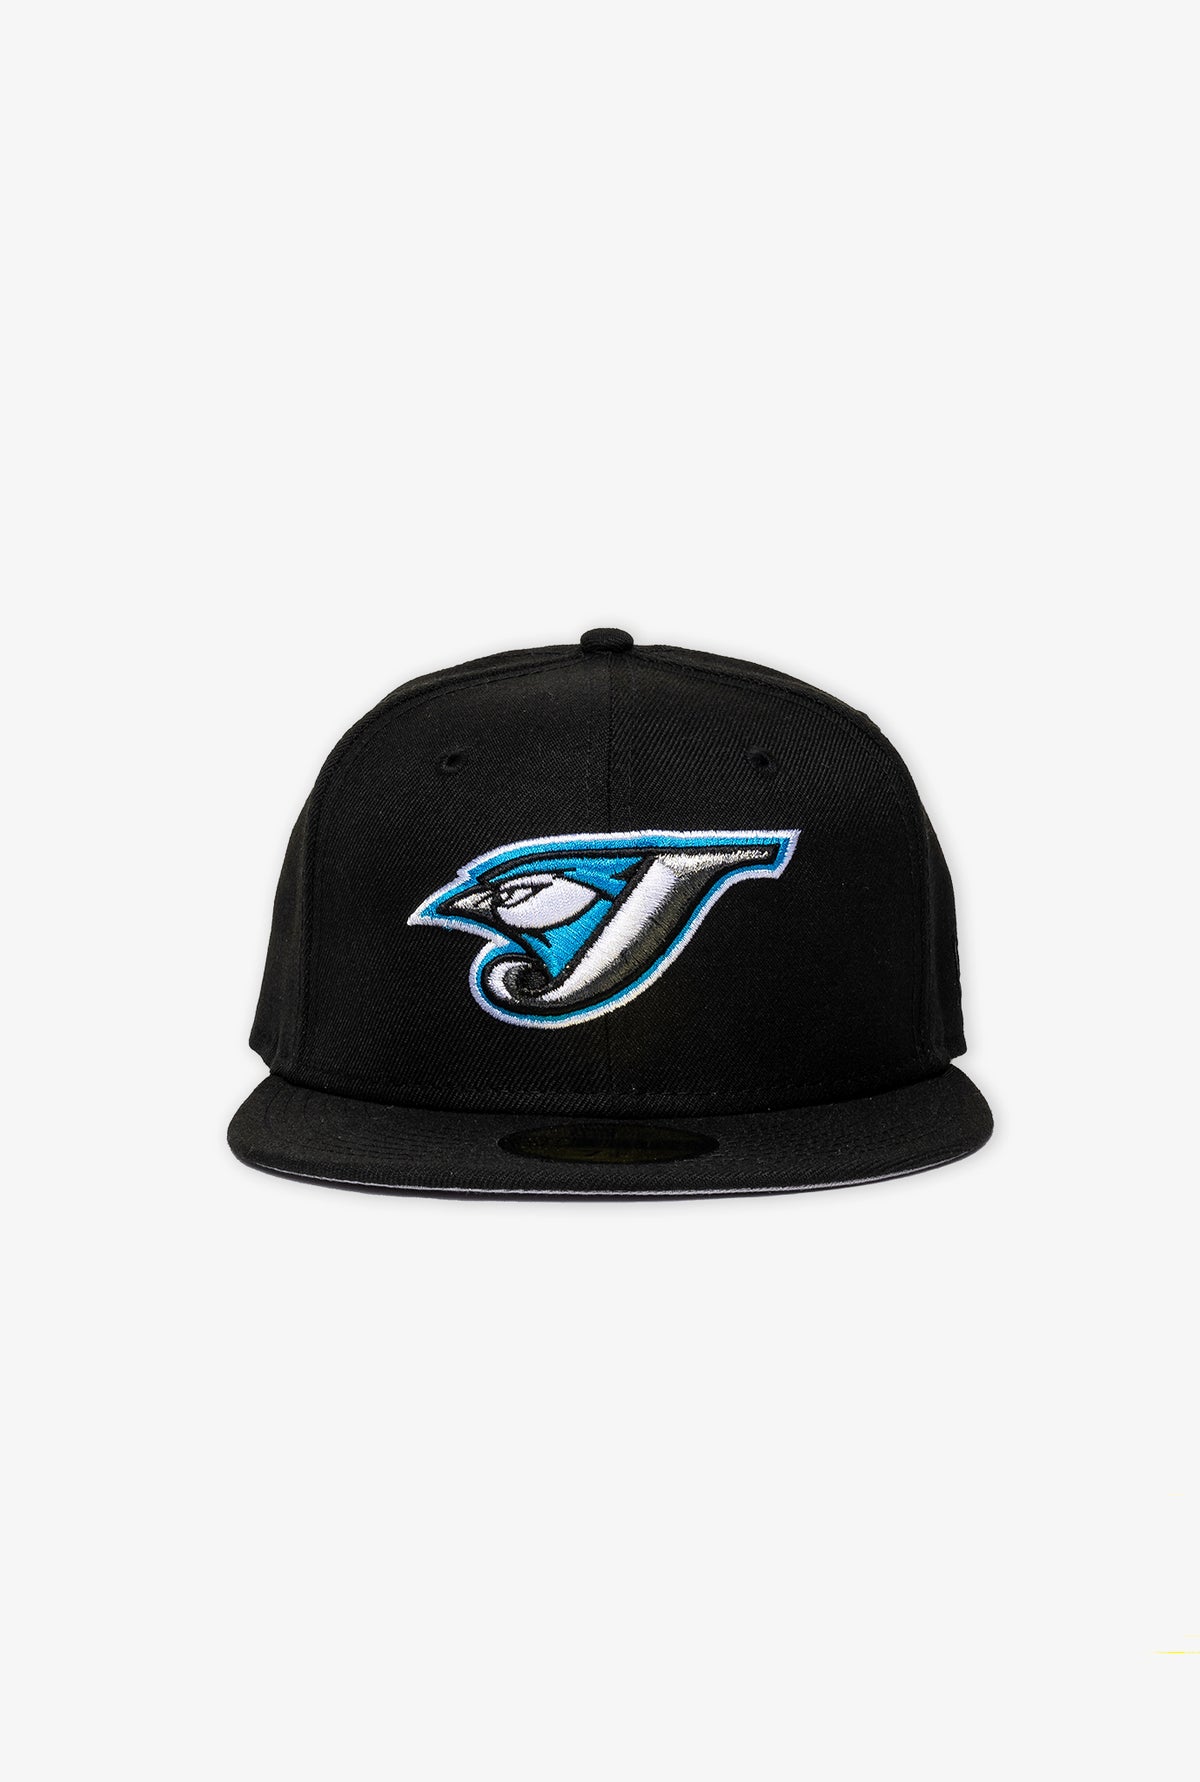 Toronto Blue Jays Bird 59FIFTY - Black